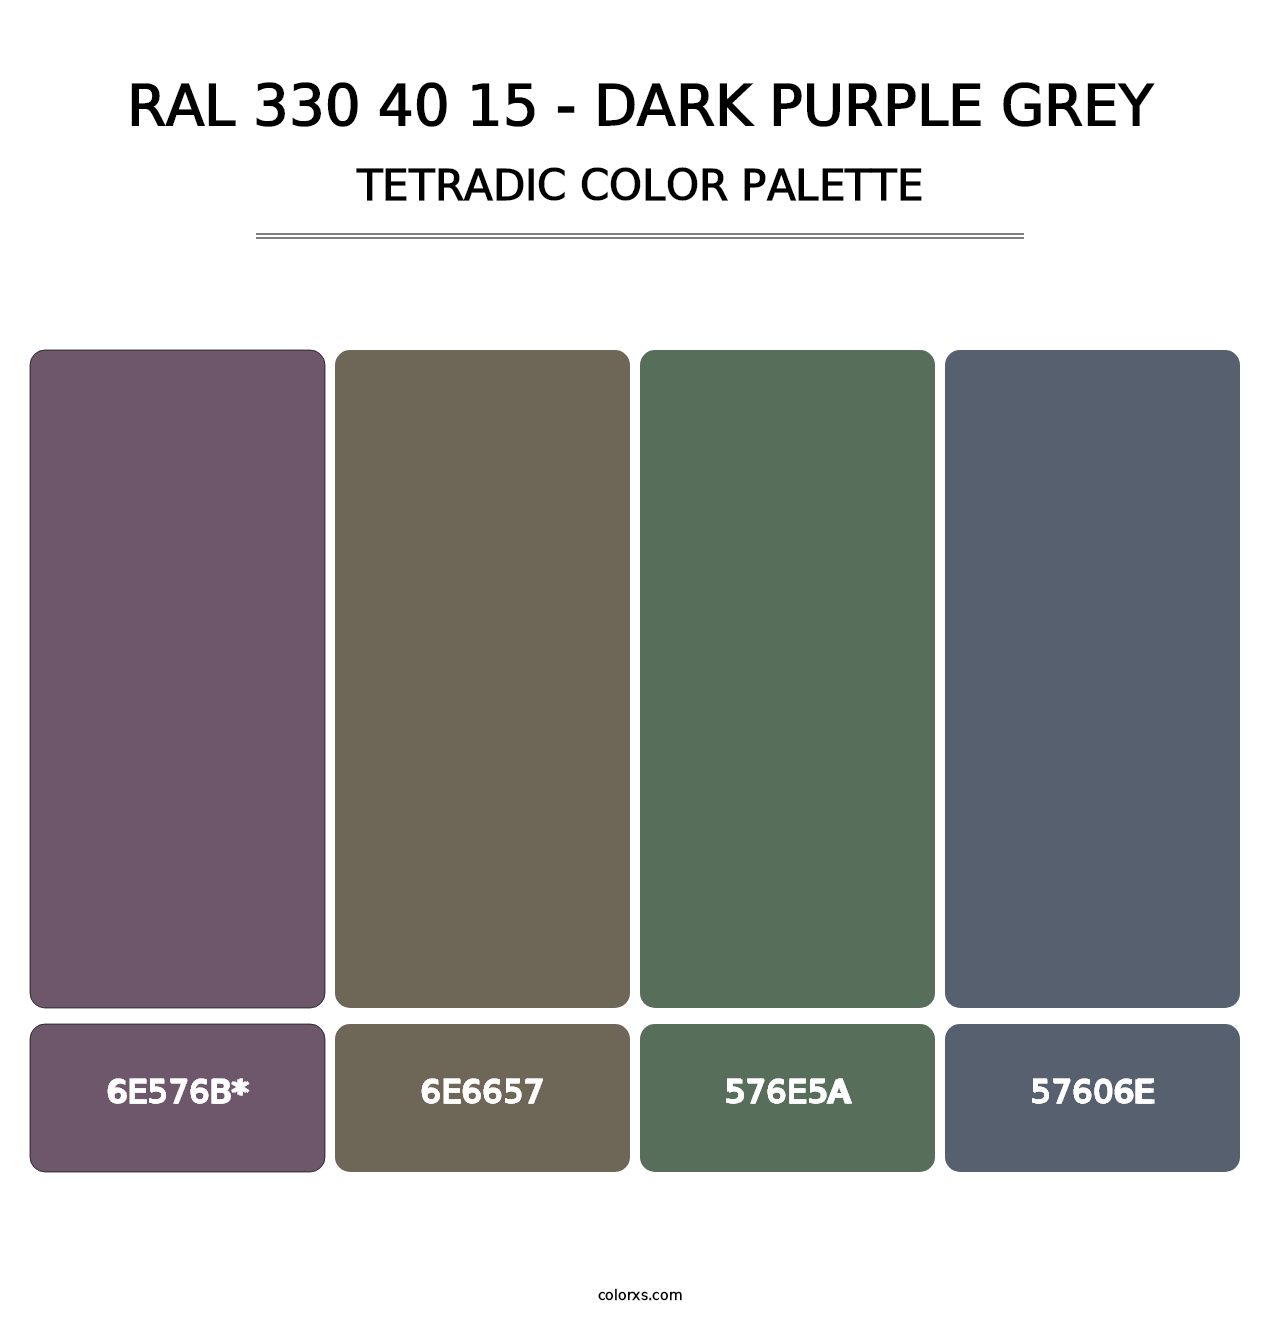 RAL 330 40 15 - Dark Purple Grey - Tetradic Color Palette